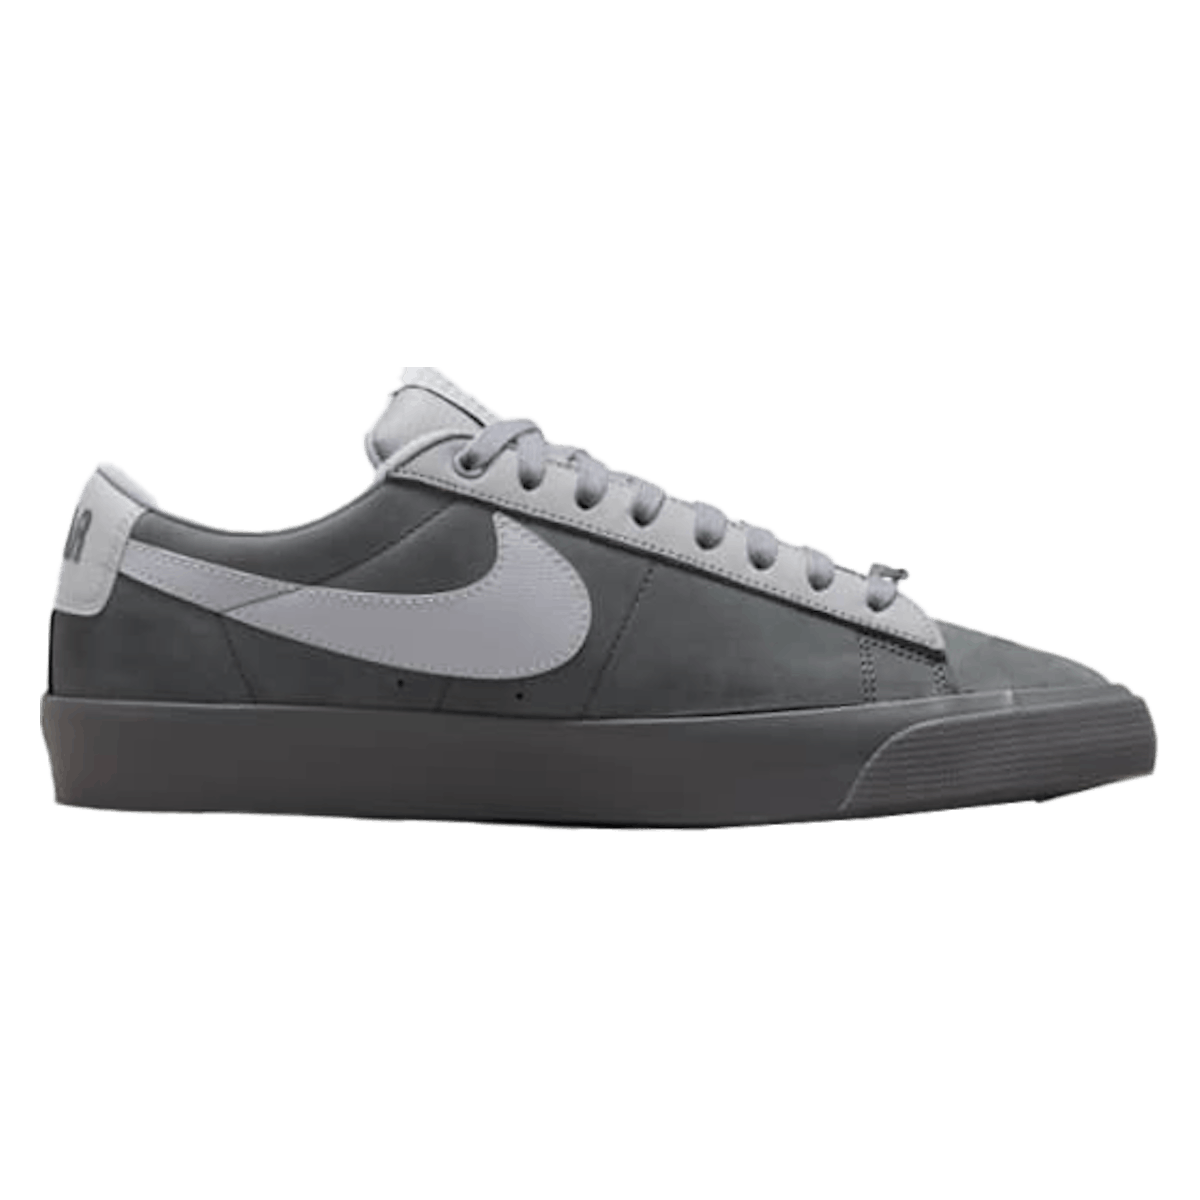 FPAR x Nike SB Blazer Low "Cool Grey"